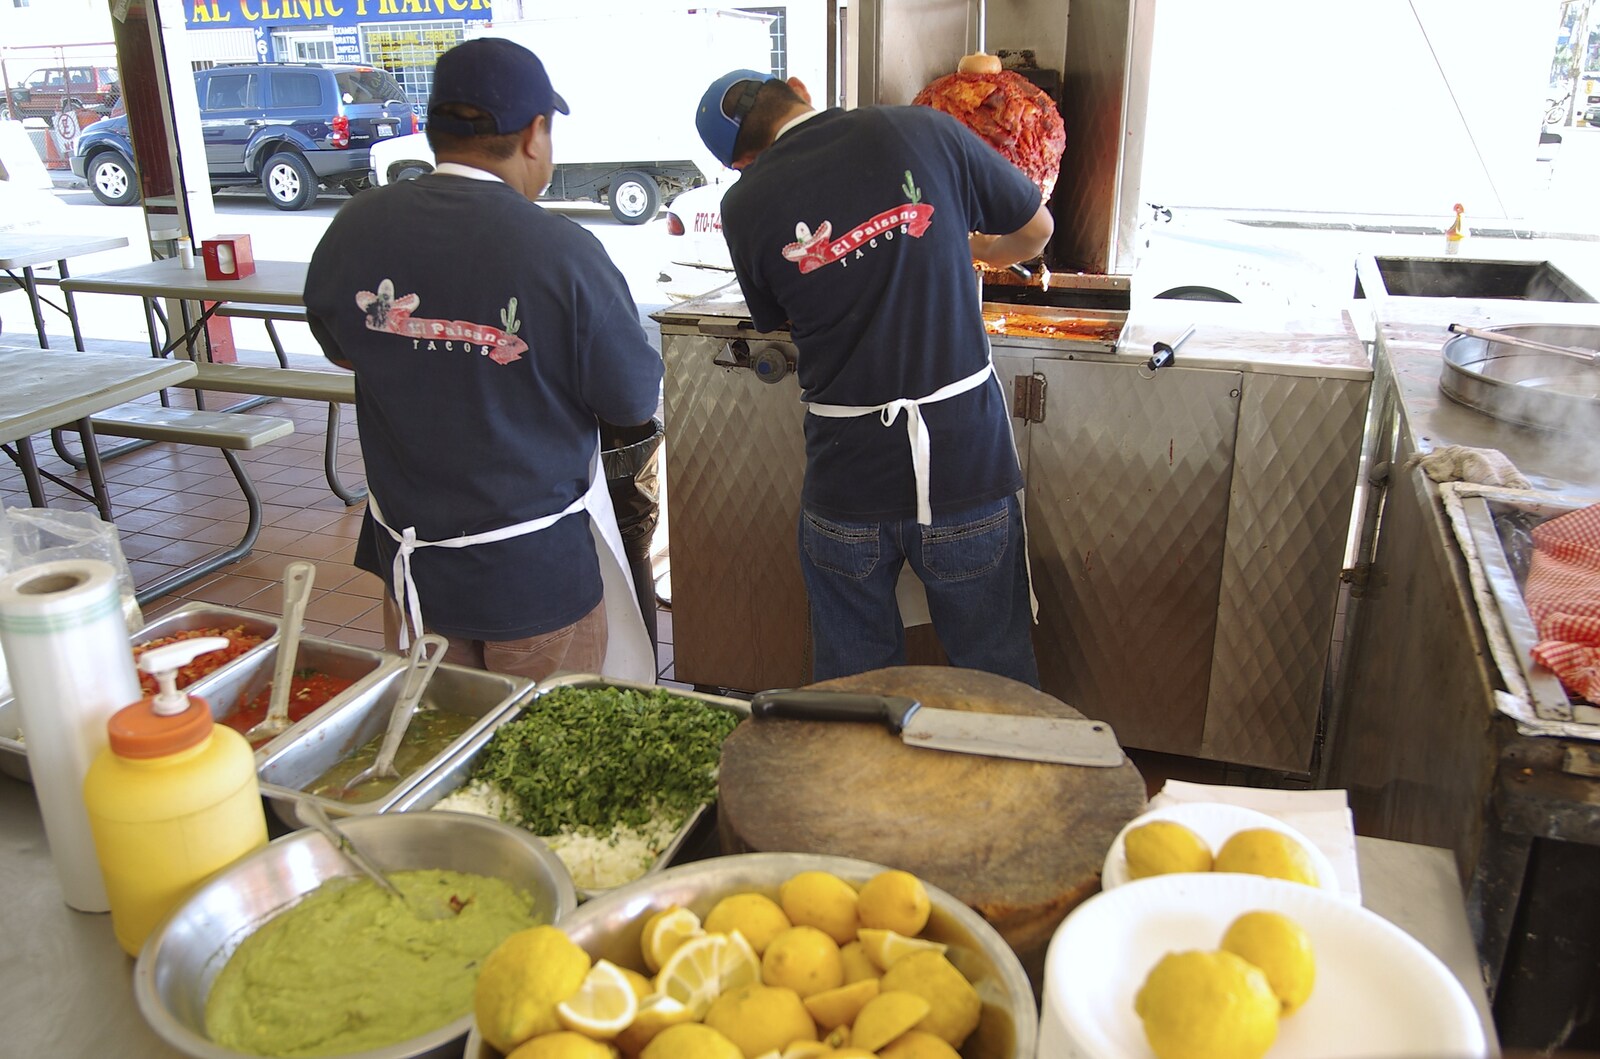 Rosarito and Tijuana, Baja California, Mexico - 2nd March 2008: In the taco shop